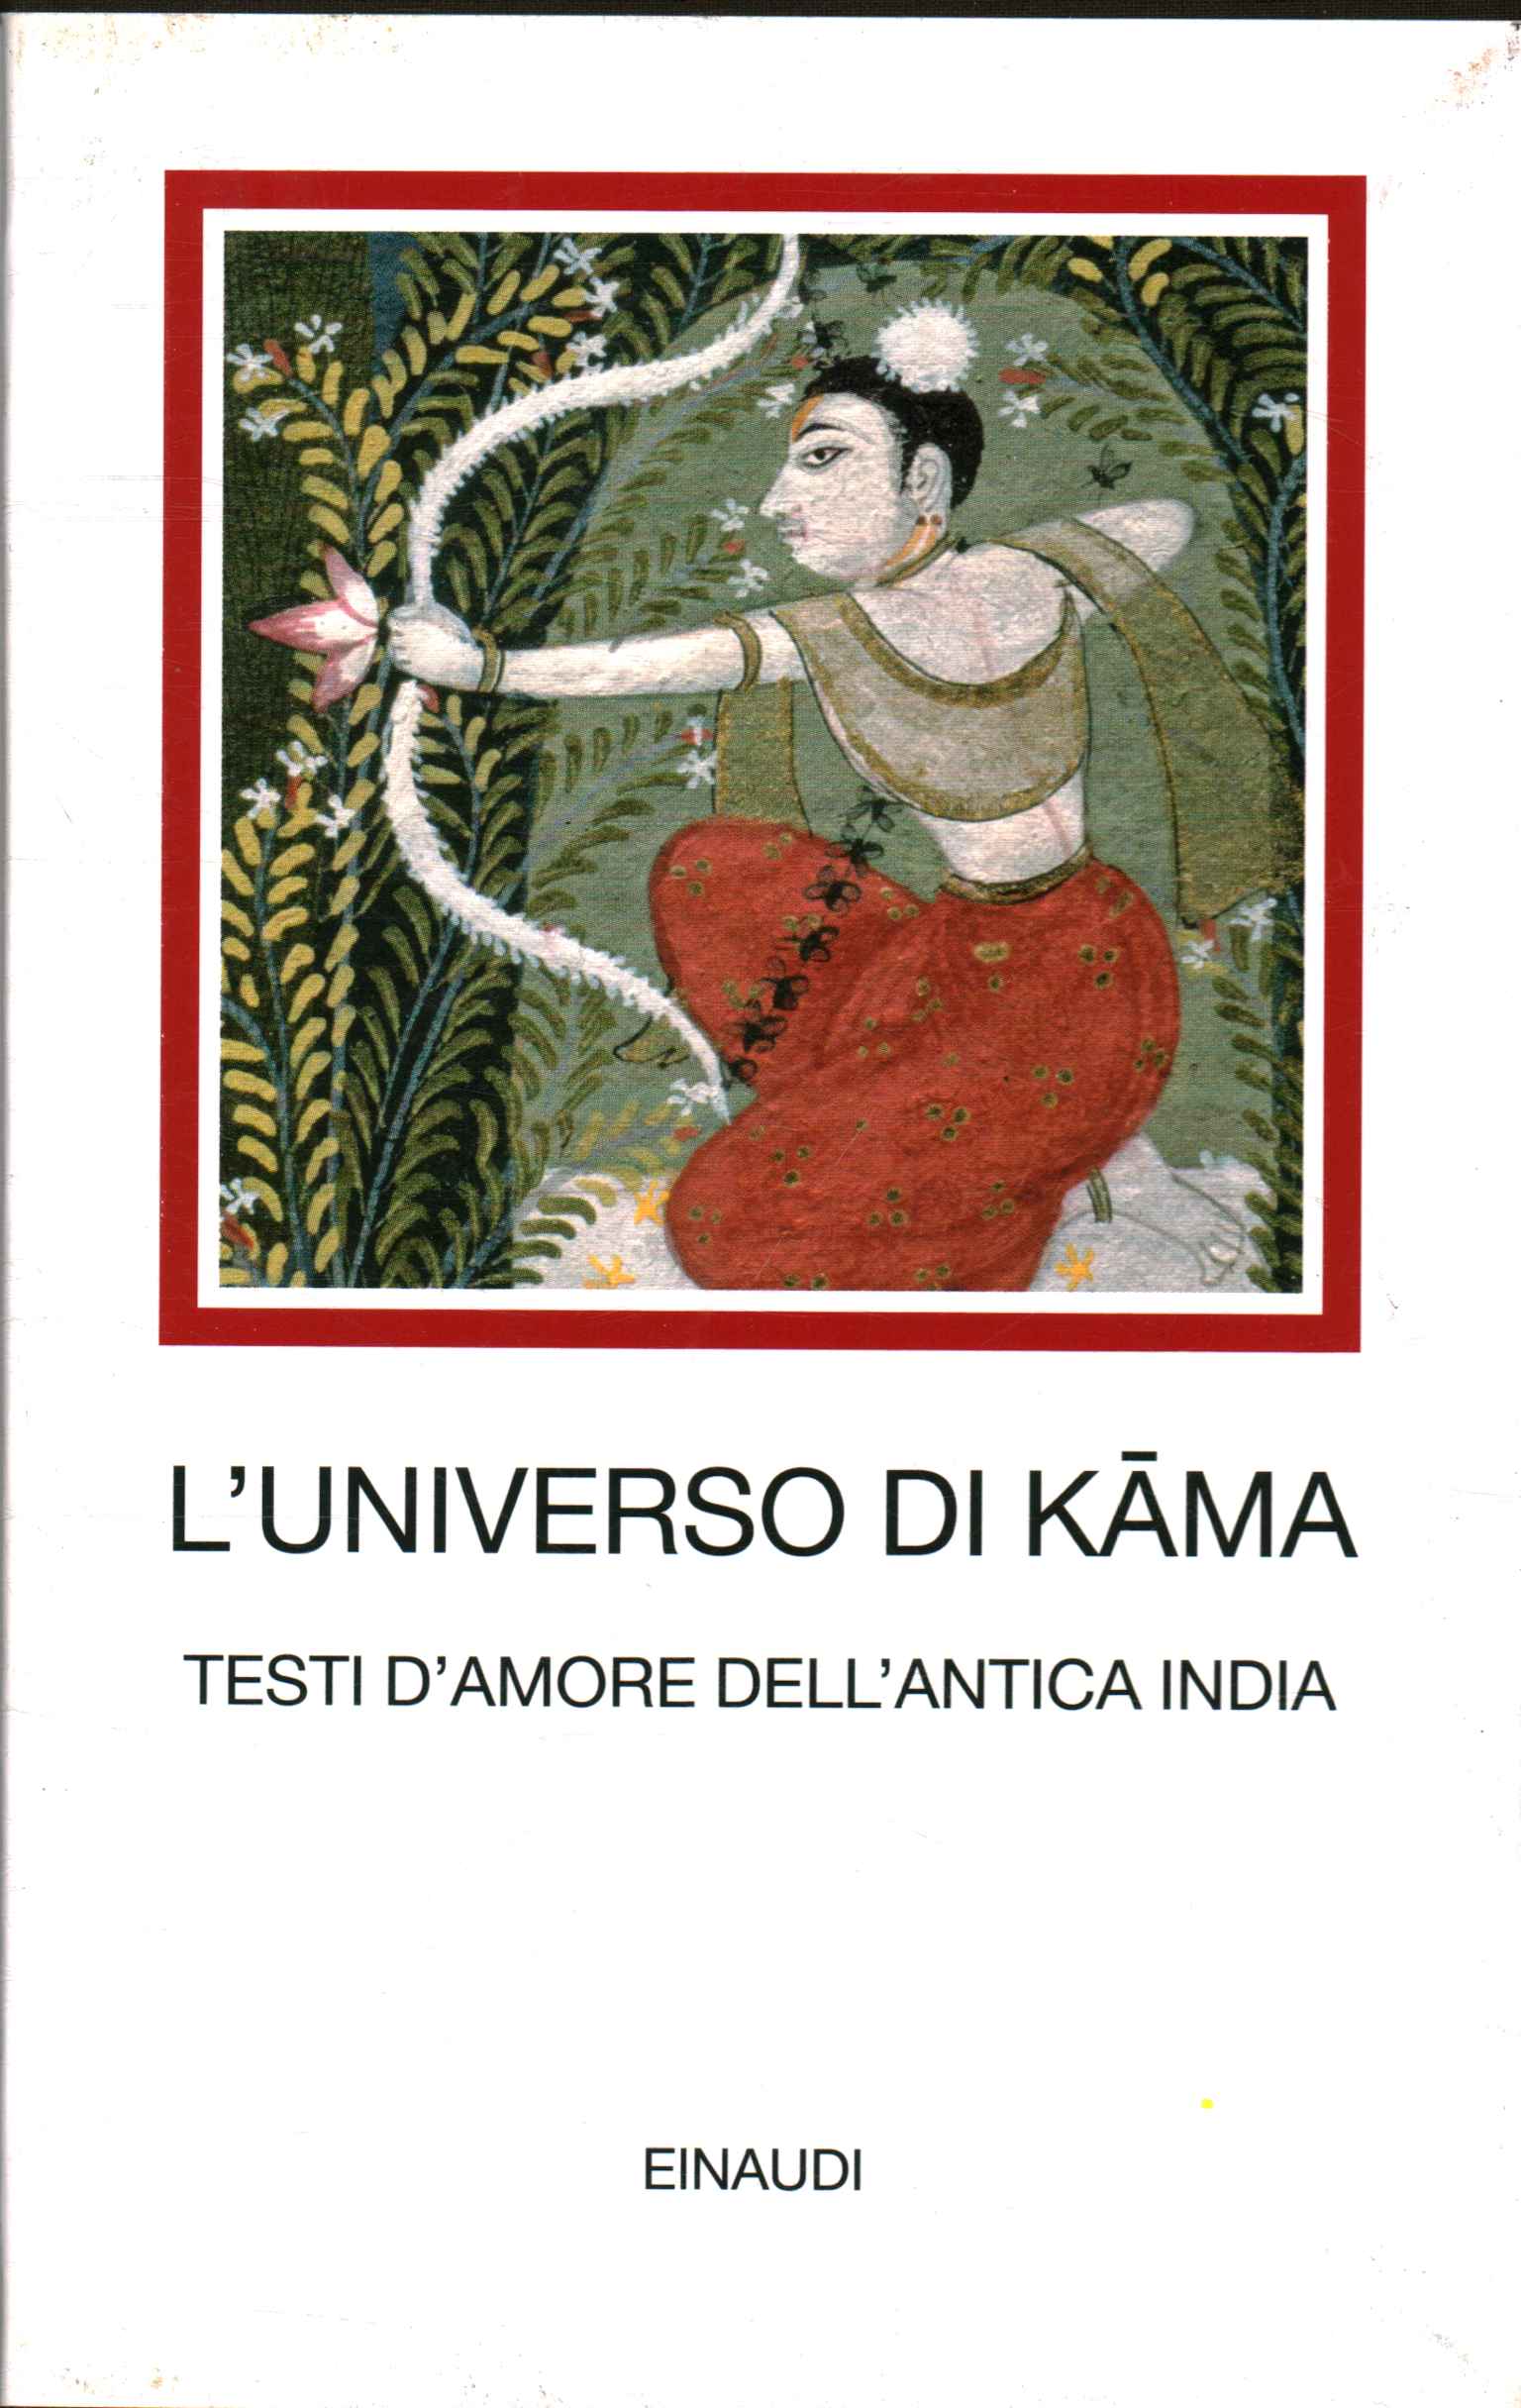 Das Kama-Universum